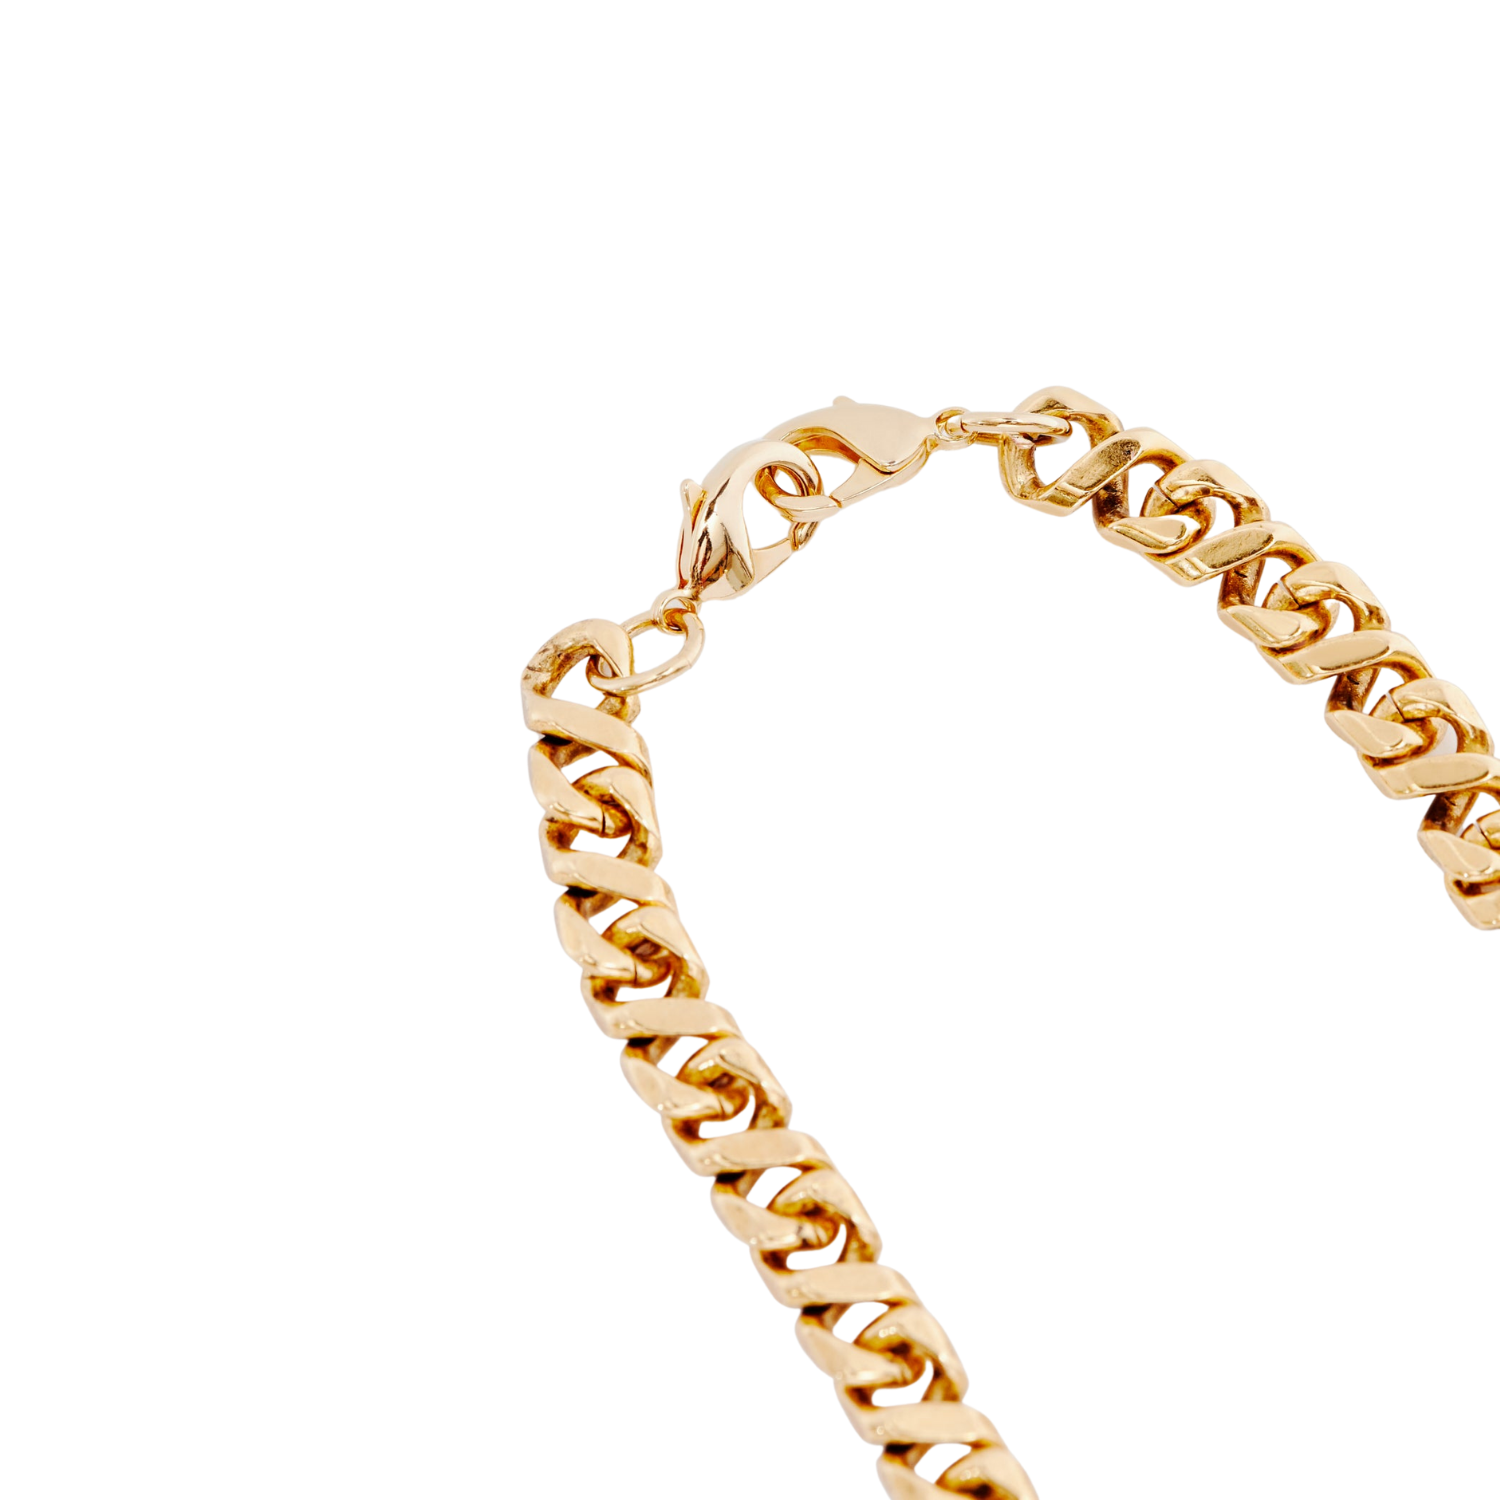 Vintage Flat Chain Necklace